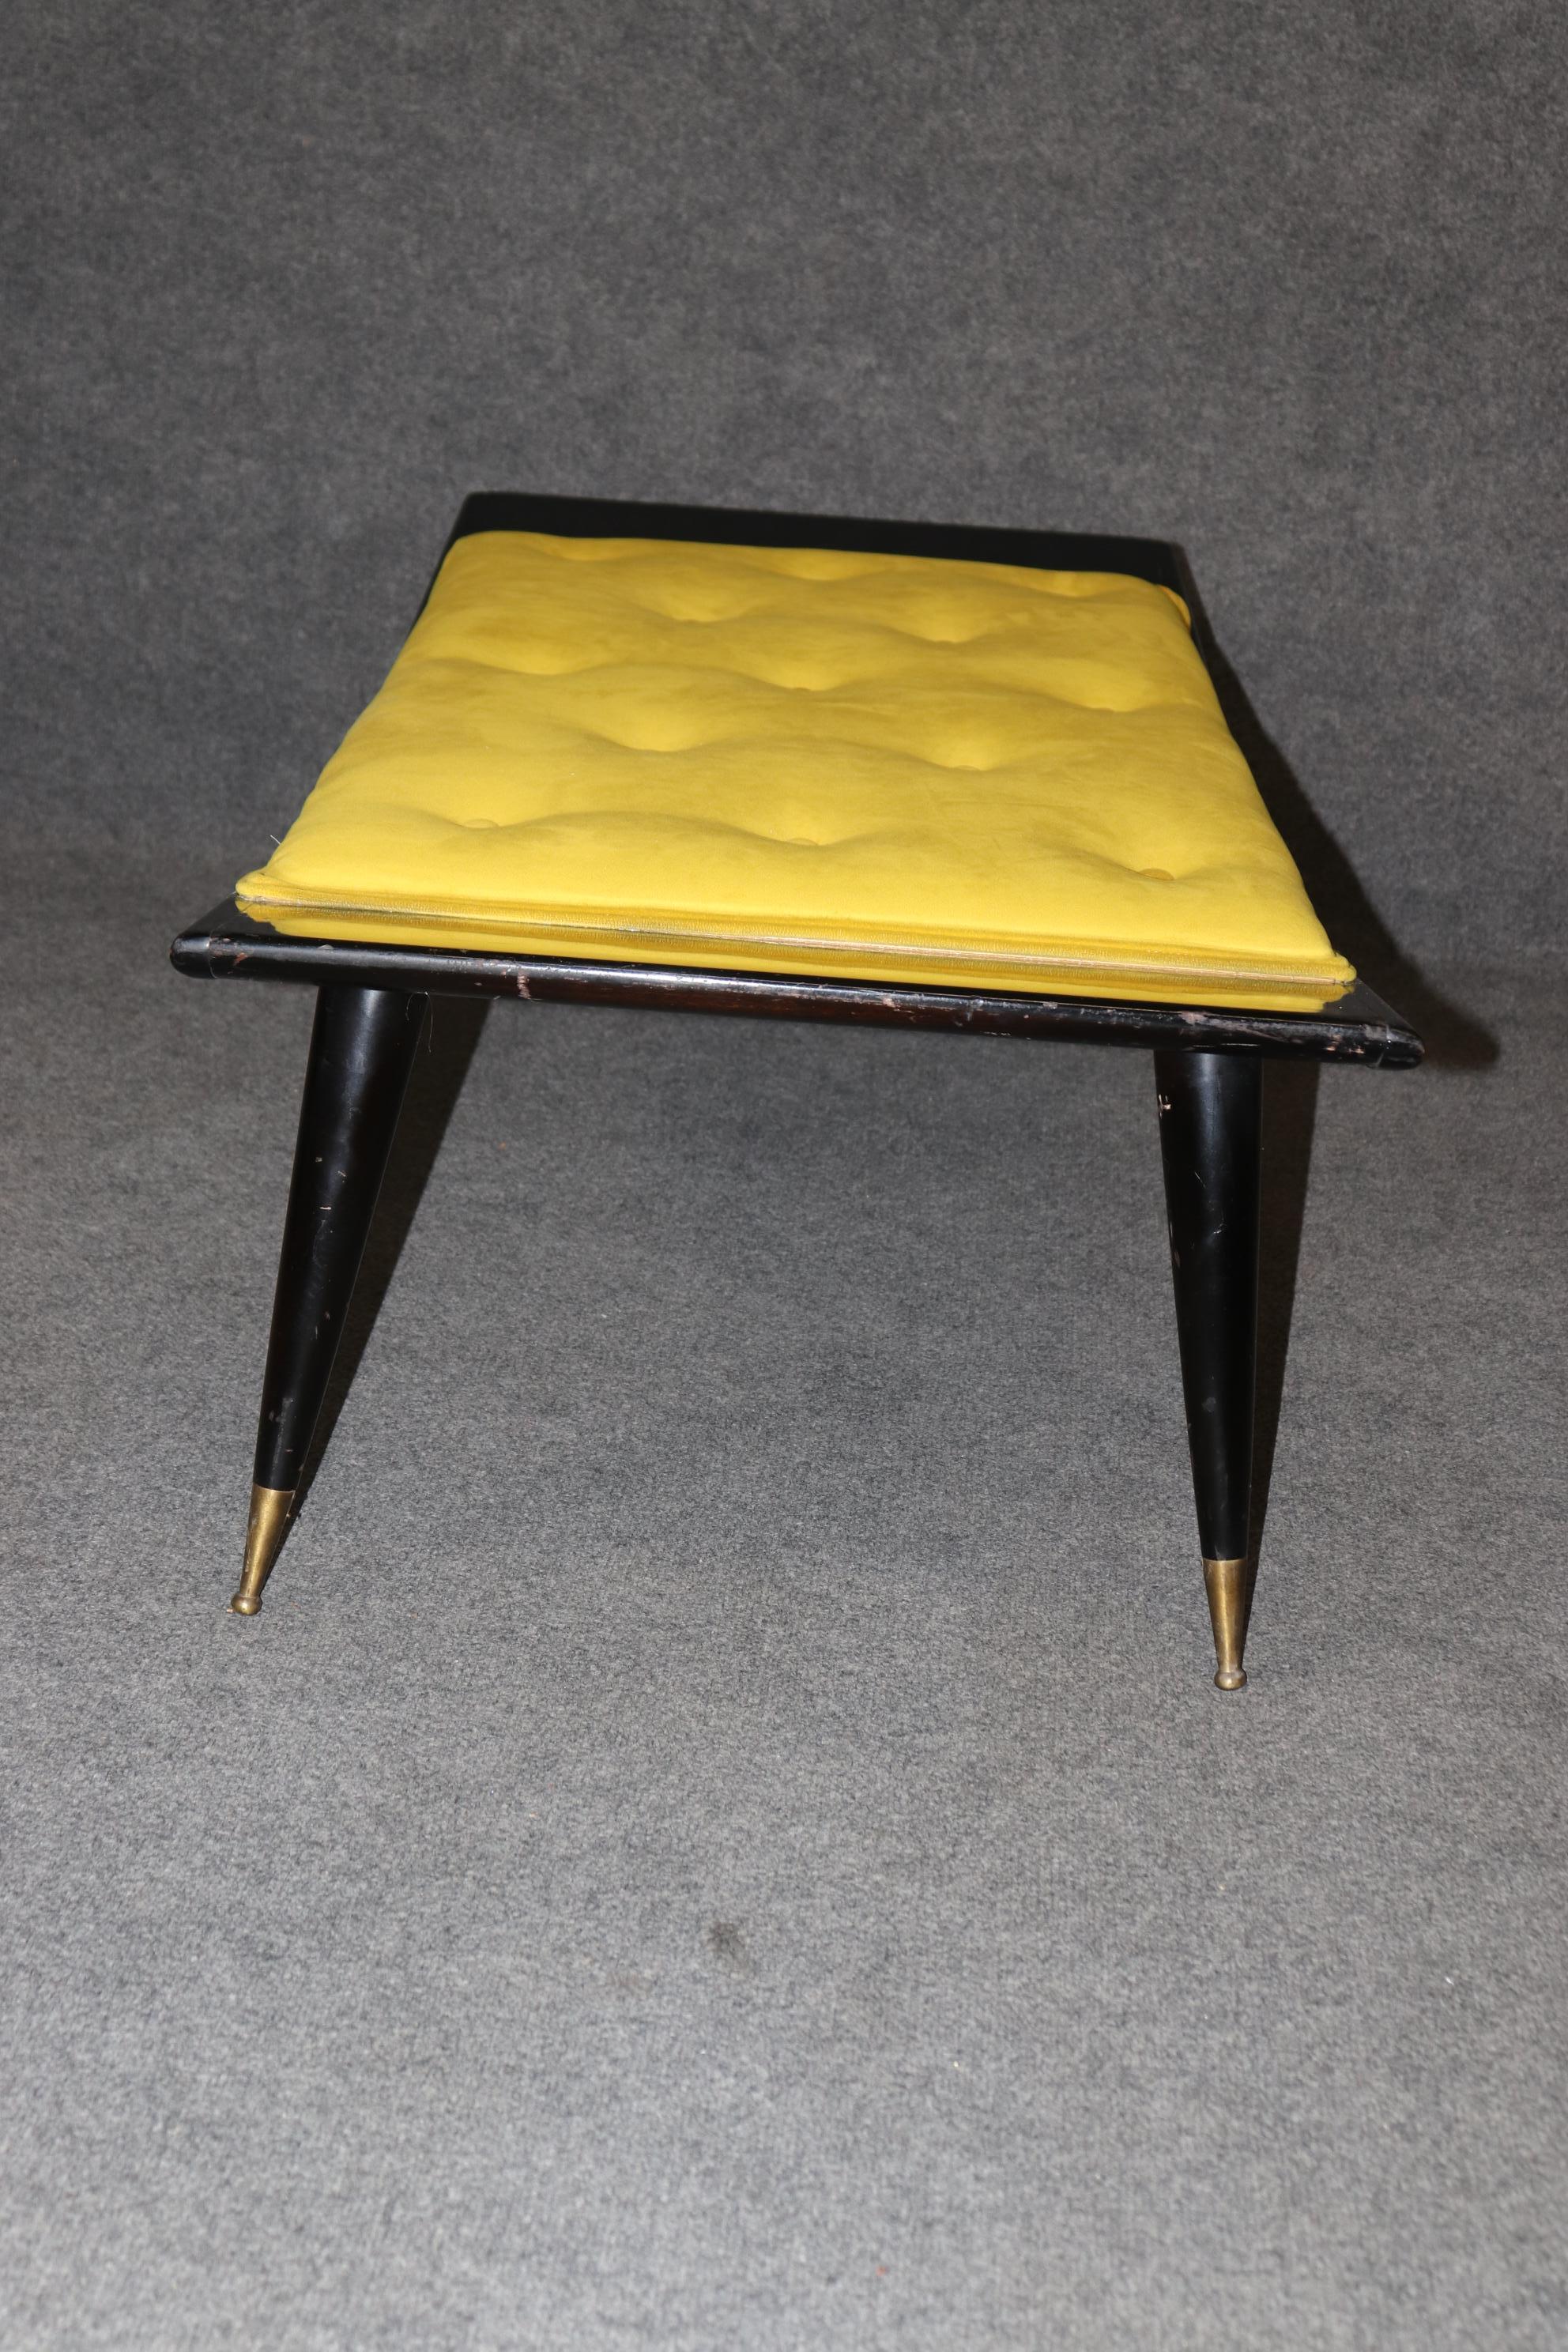 Metalwork Ebonized Mid Century Modern Gio Ponti Style Bench With Tufted Upholstery